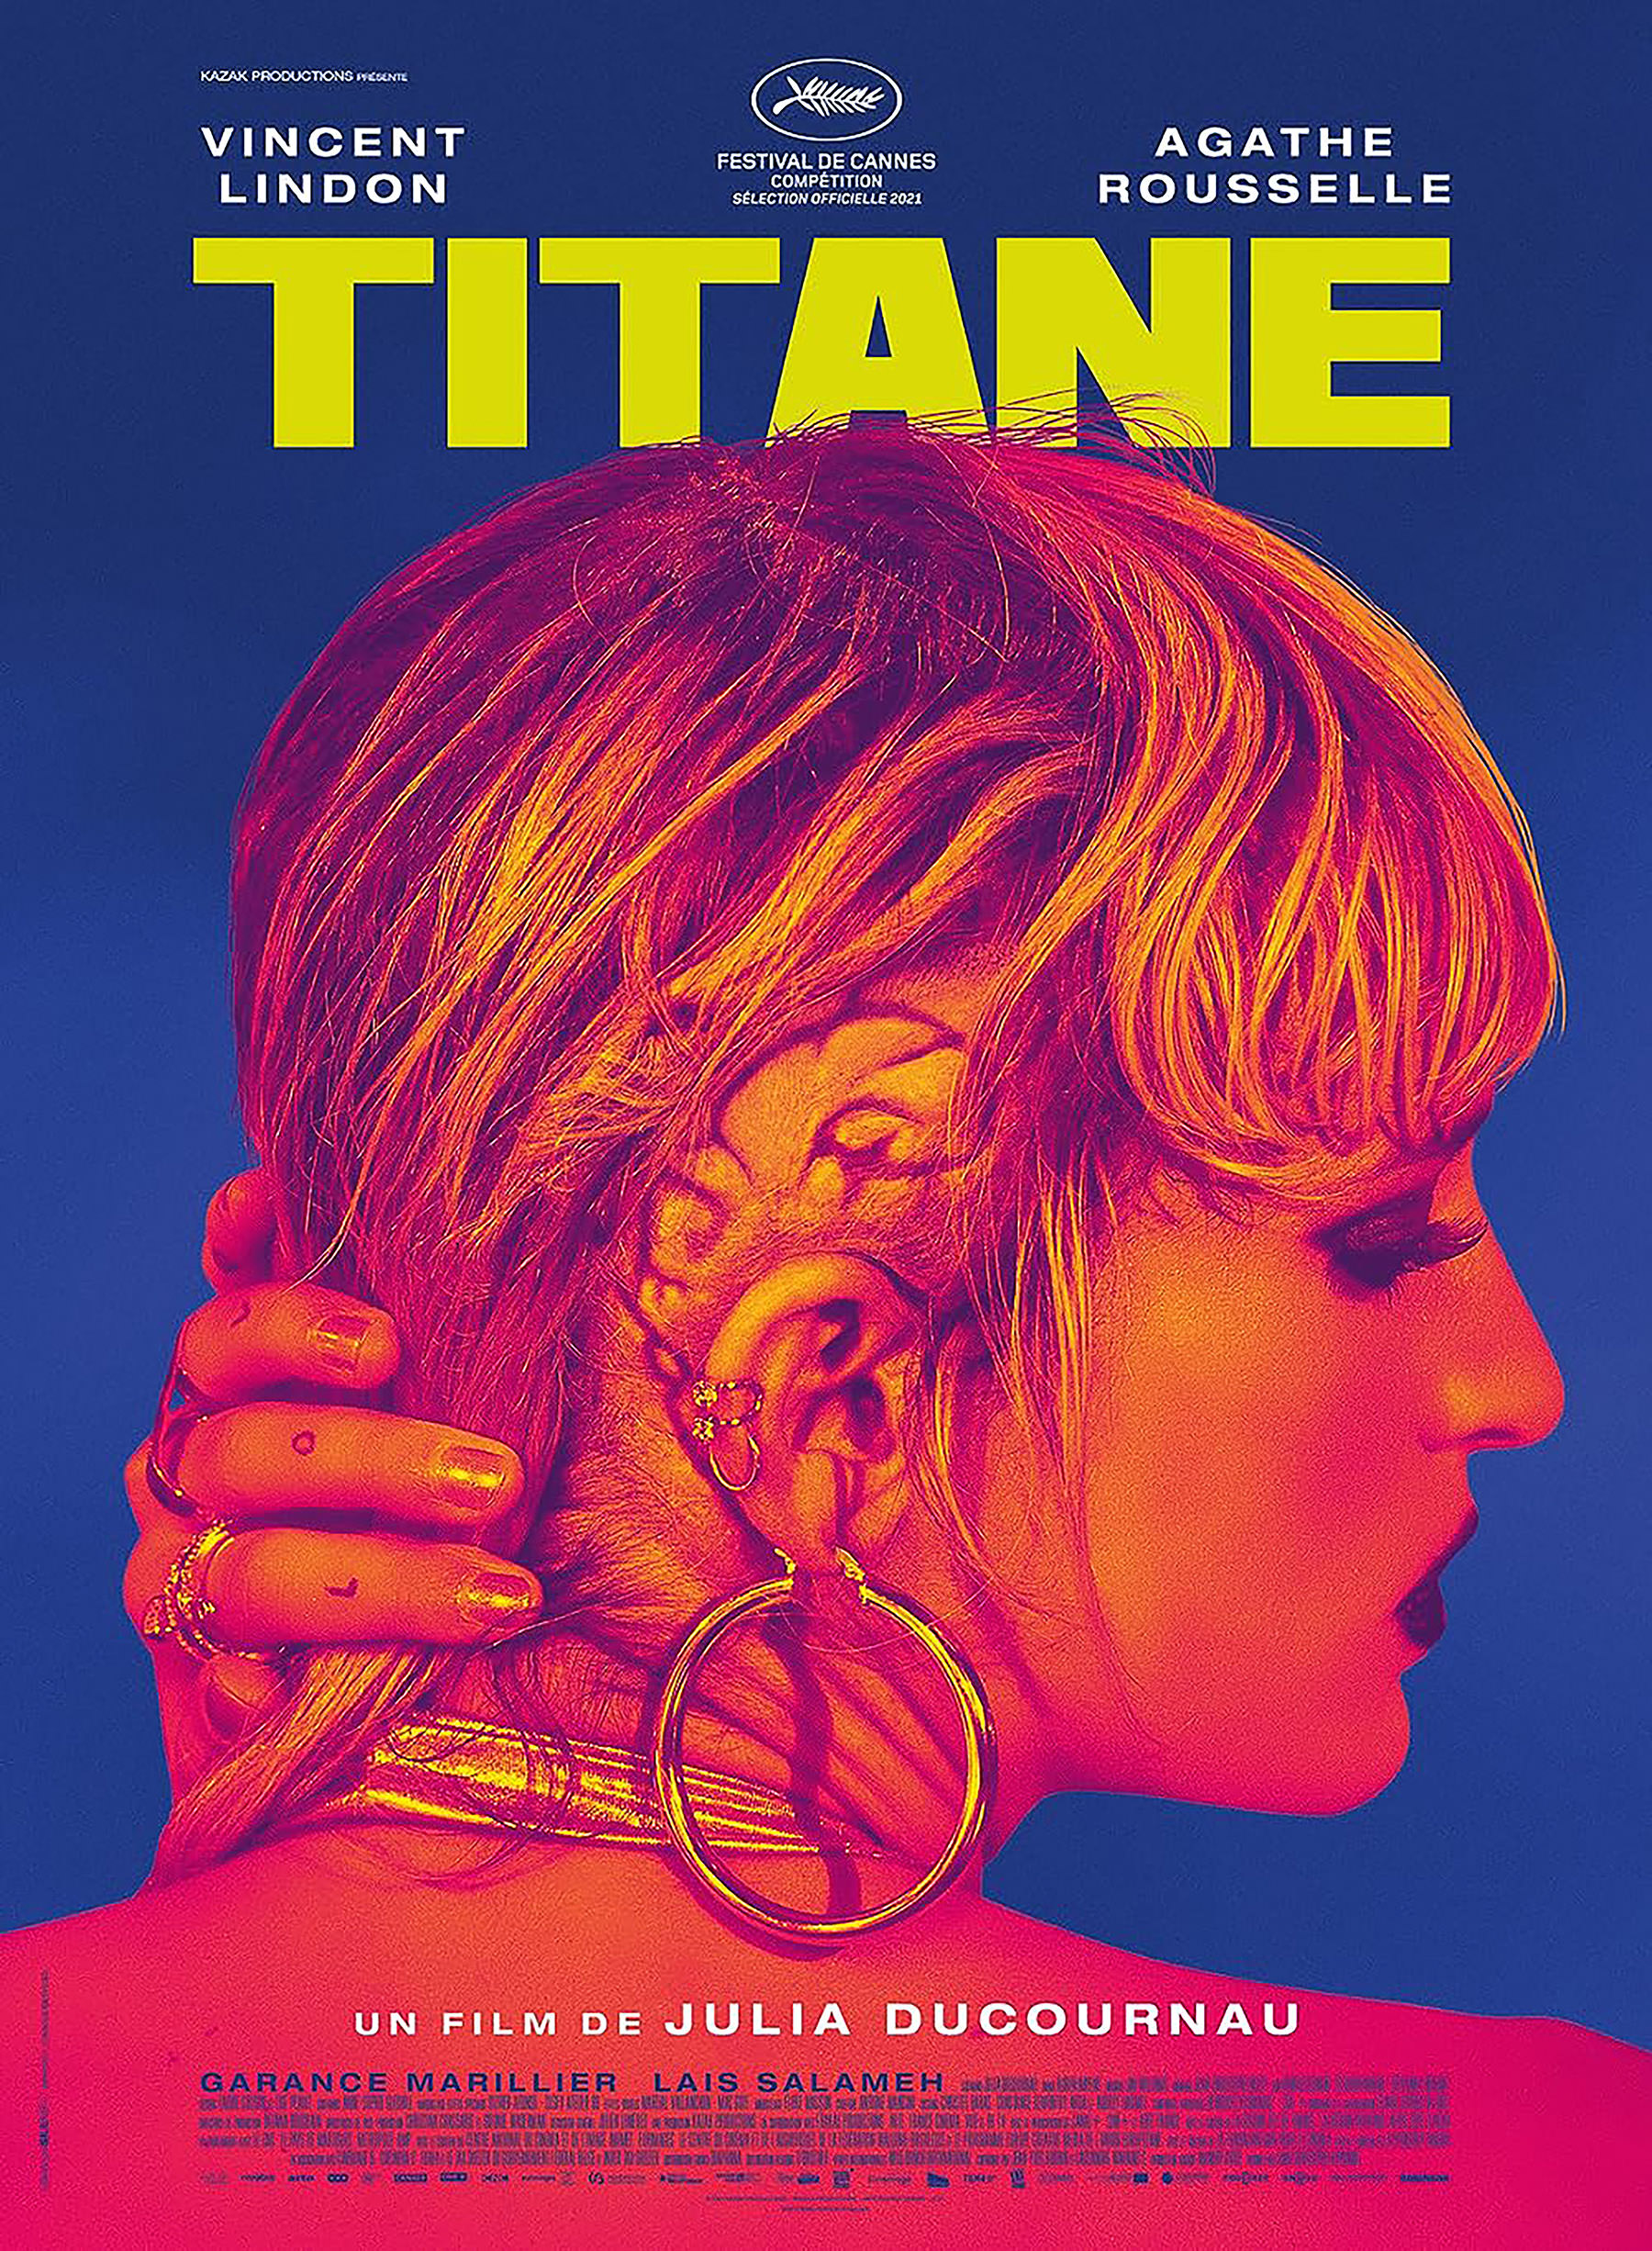 Promotion image for Titane